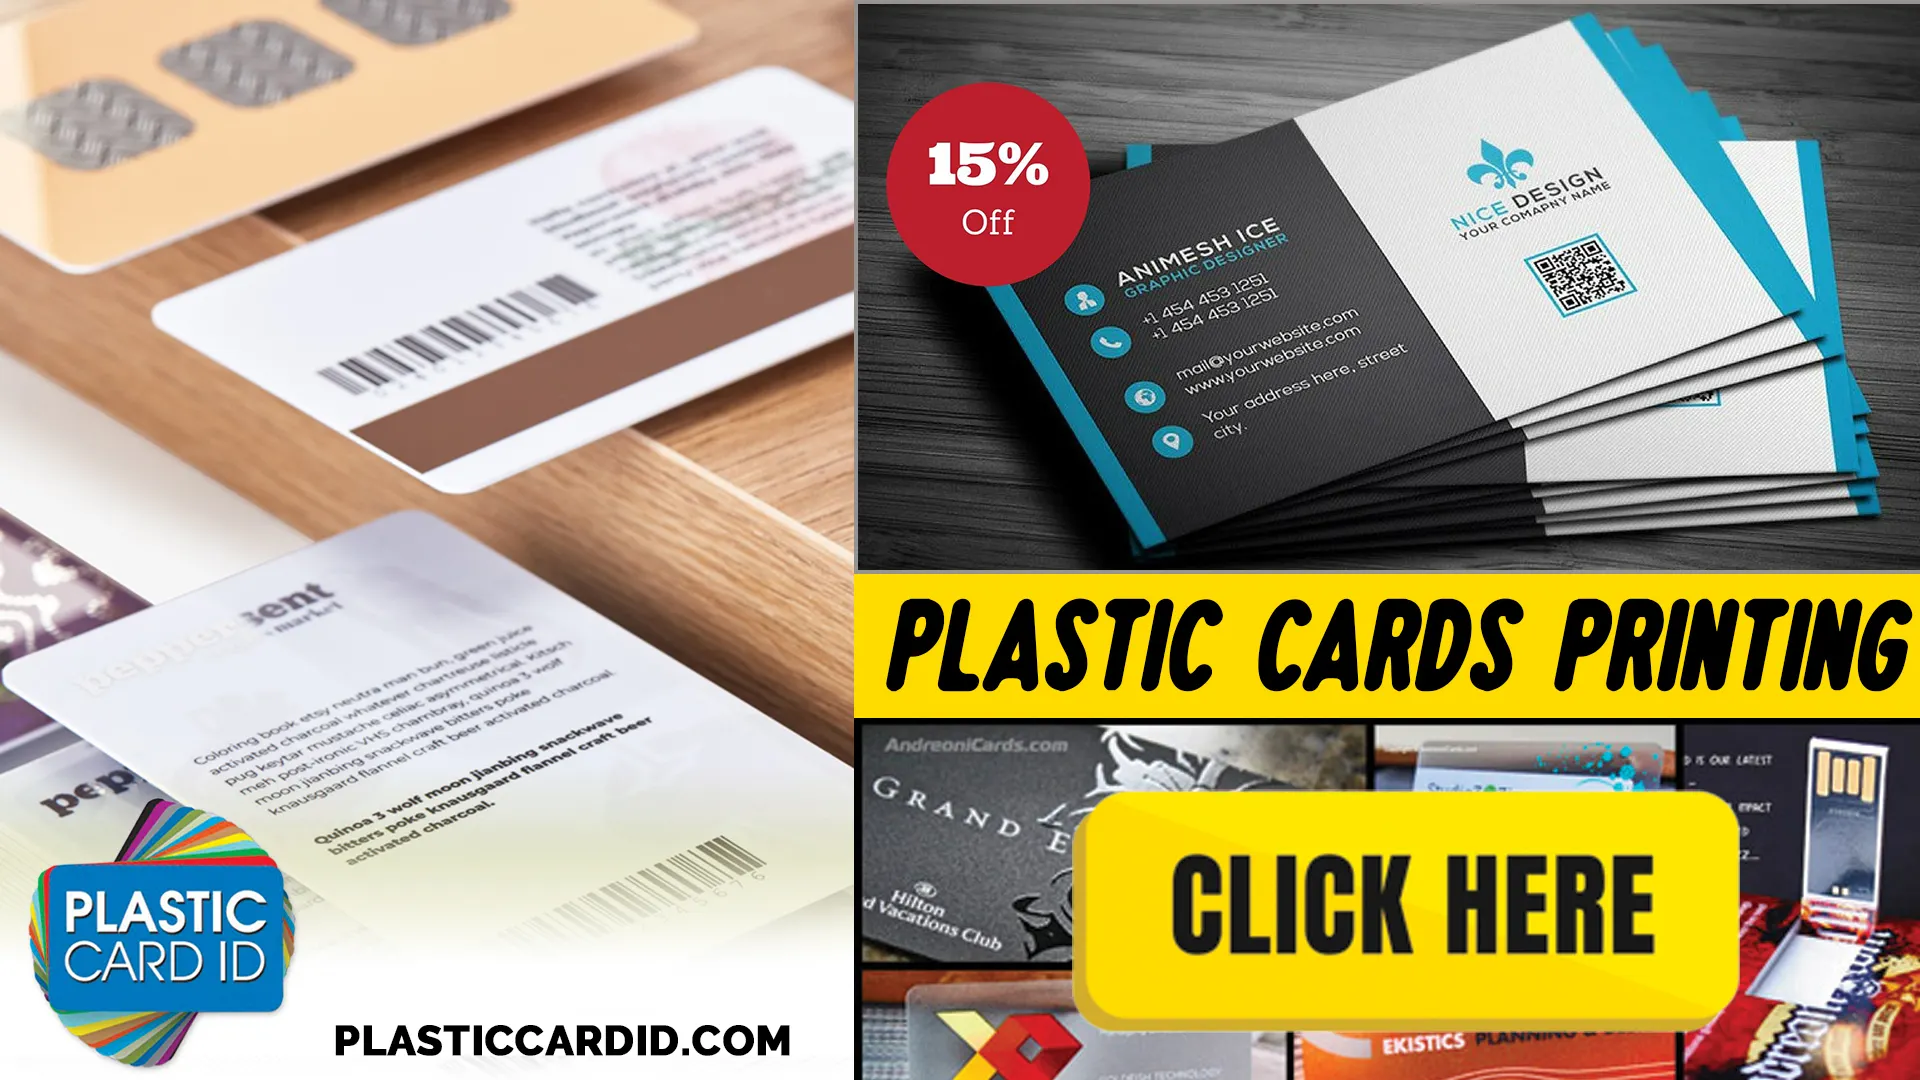 Design Features That Set Our Plastic Cards Apart